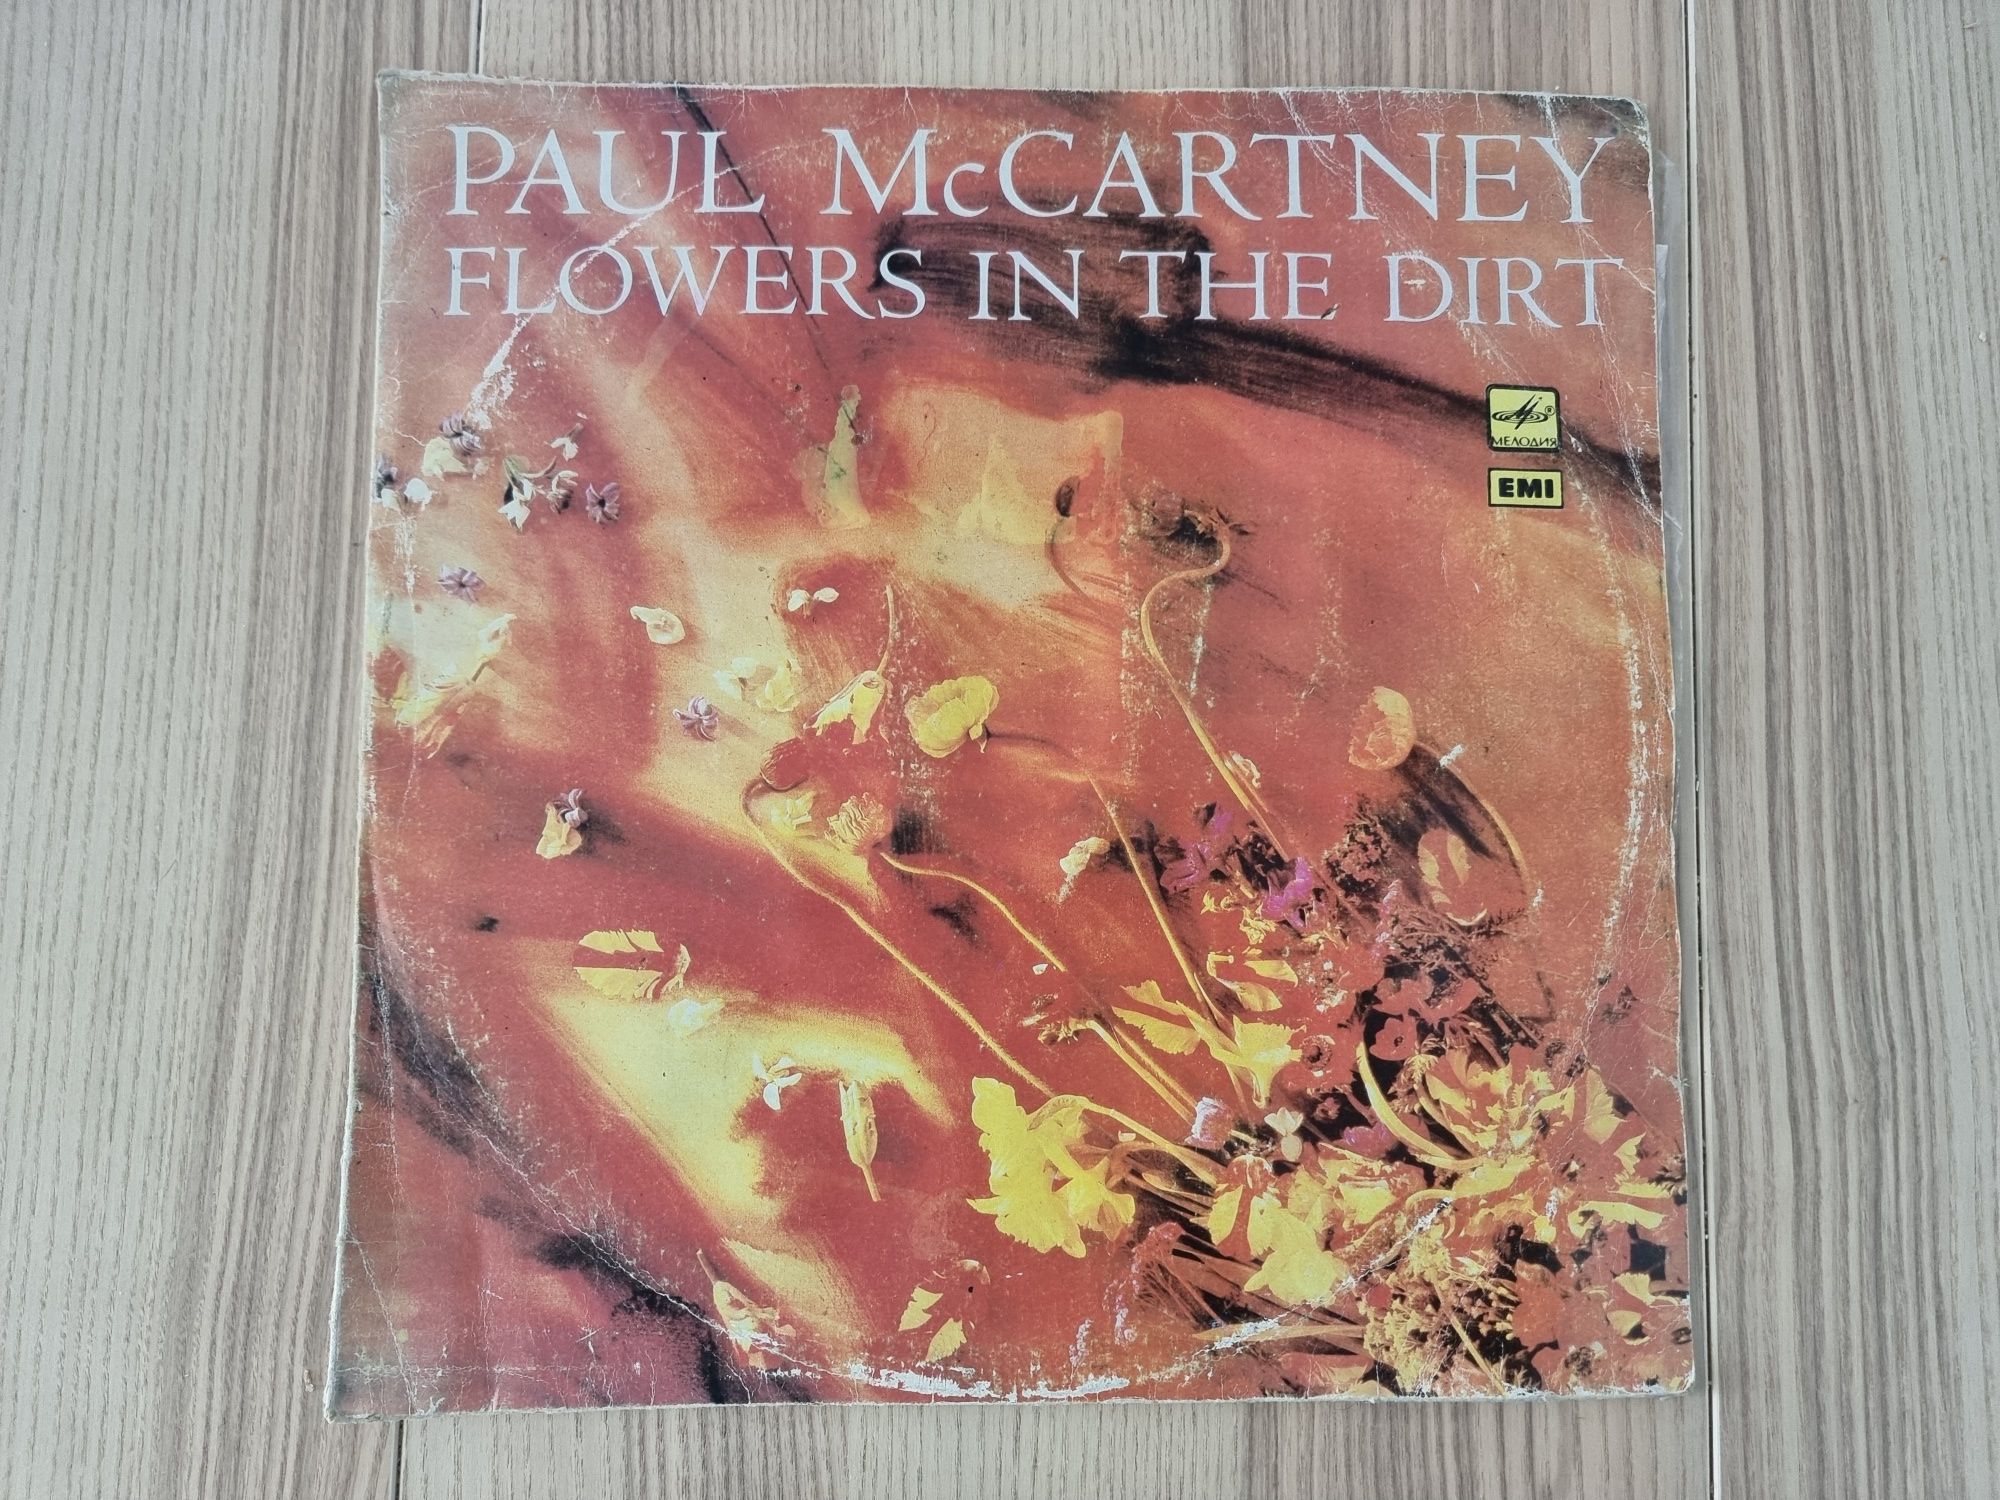 Paul McCartney - Flowers in the dirty # LP # Vinyl # Winyl # 1989